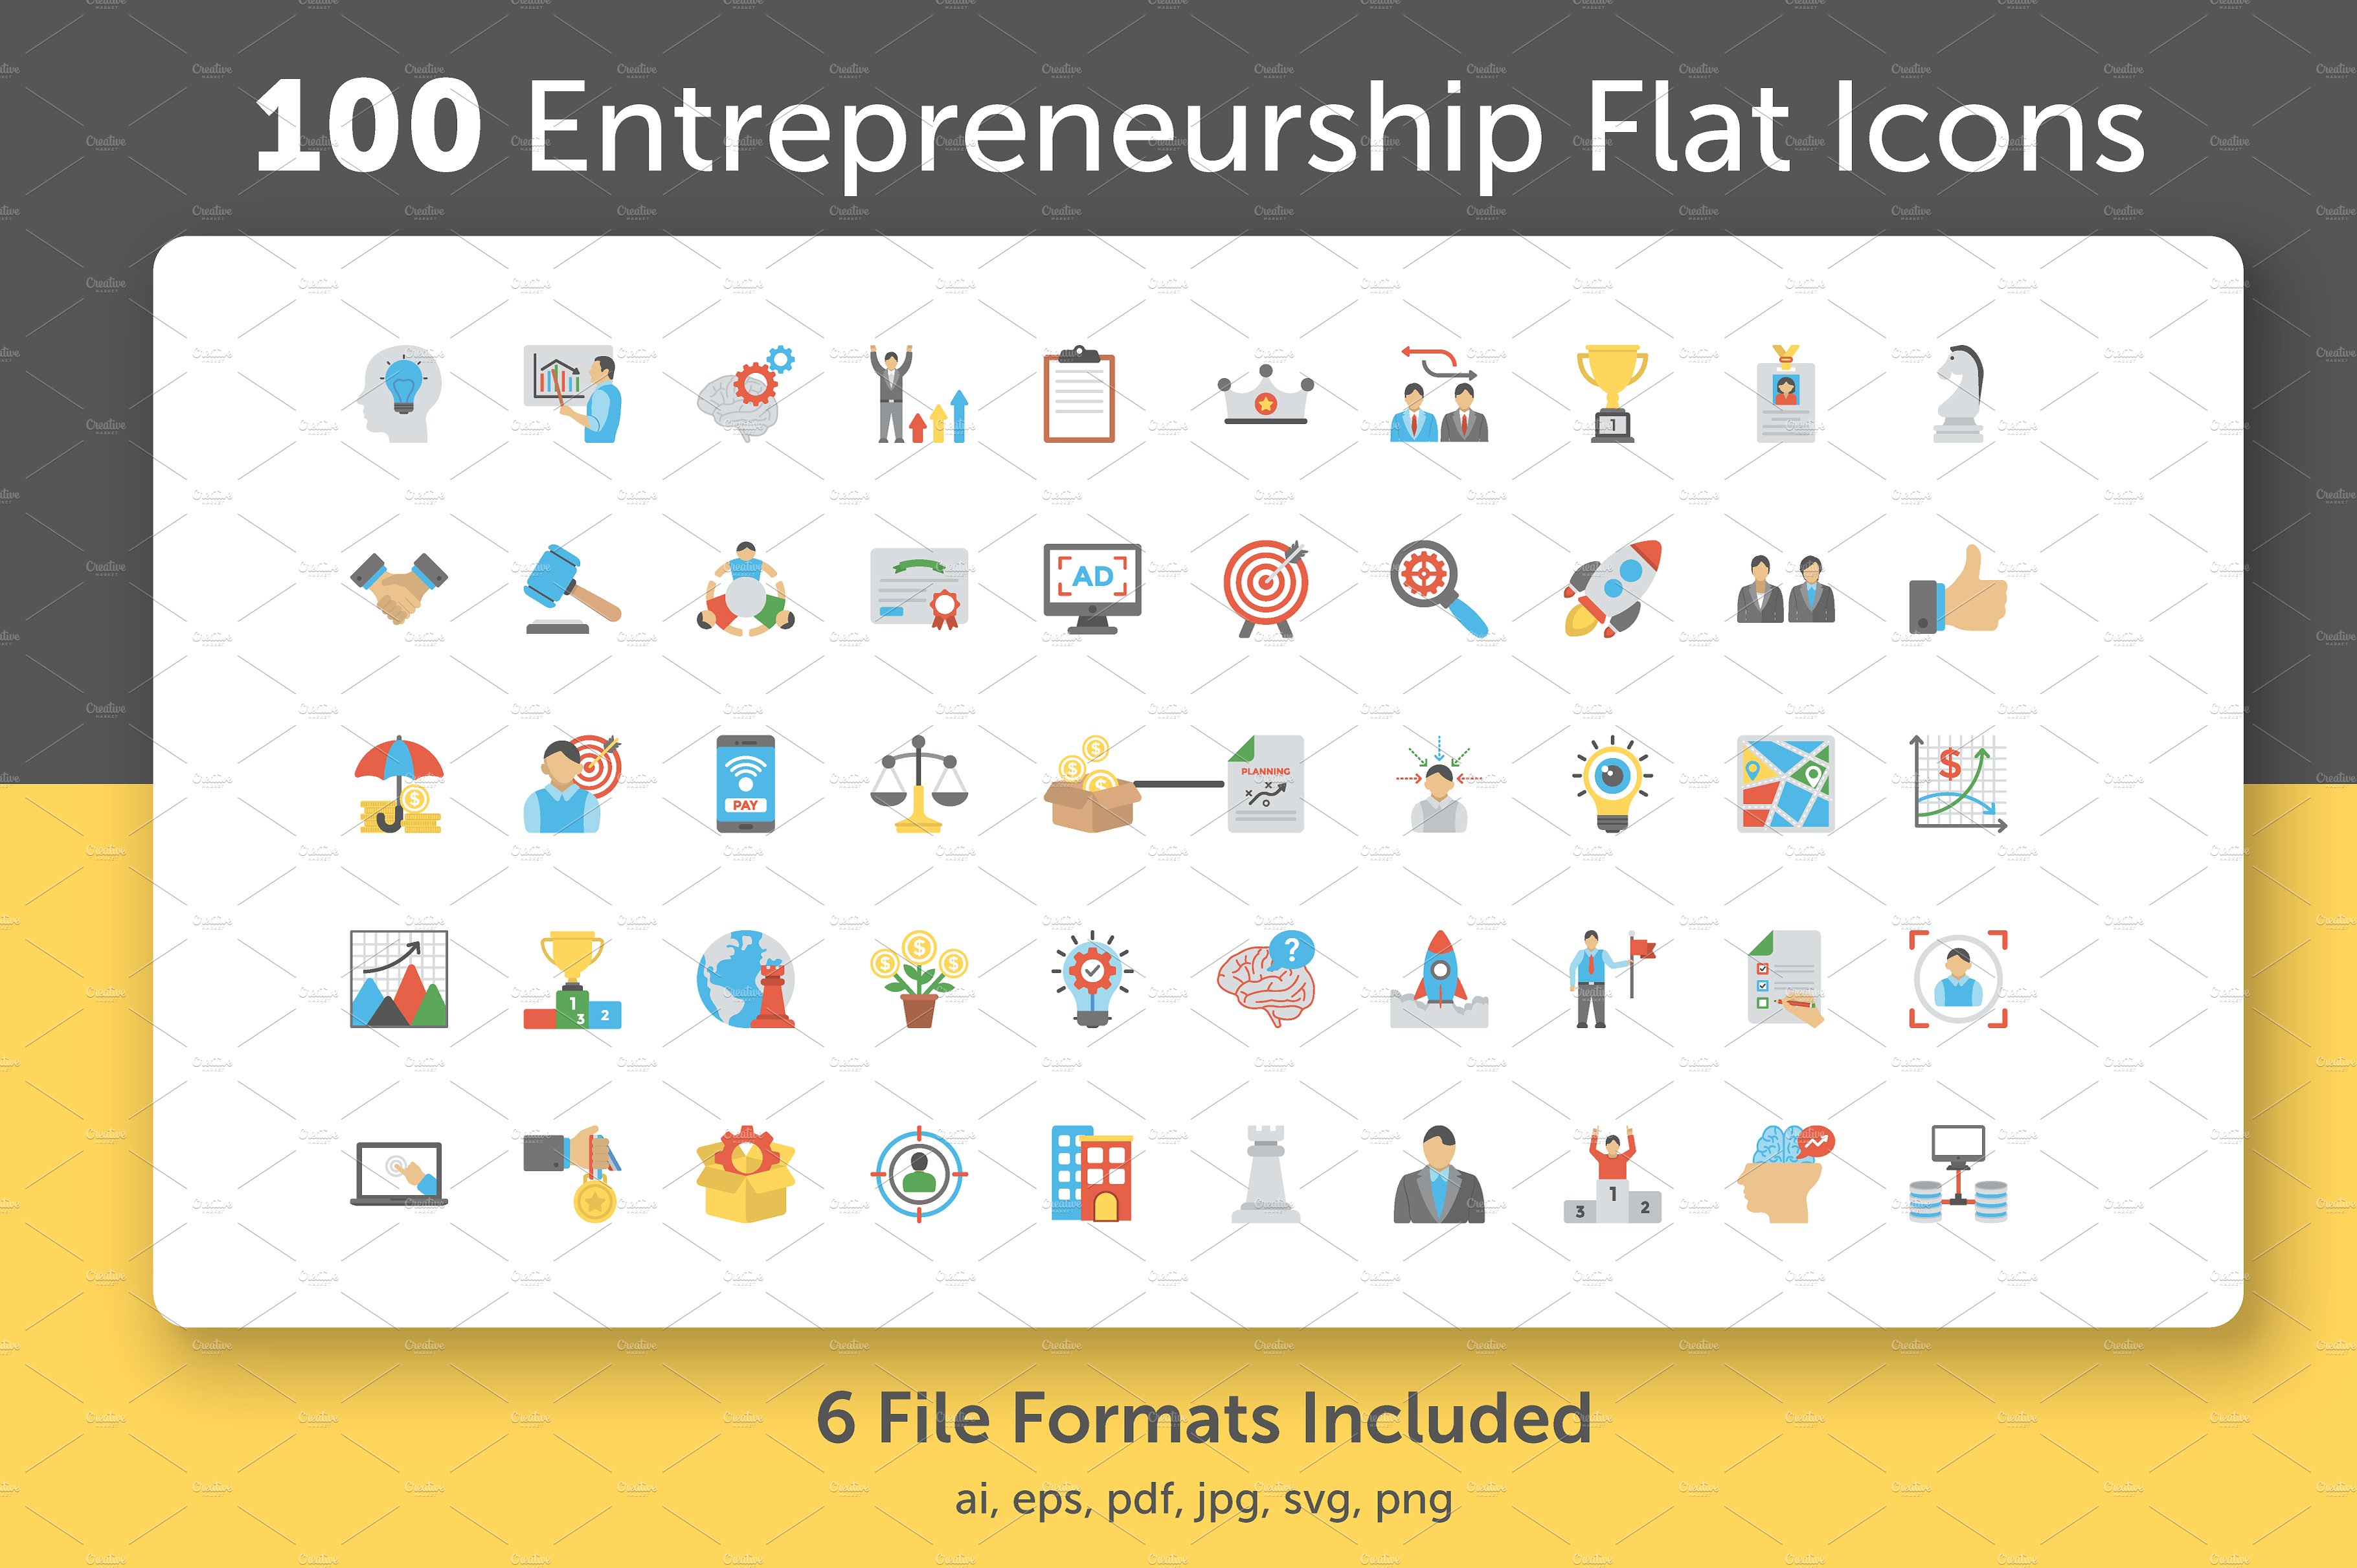 扁平化企业图标下载 100 Entrepreneurship